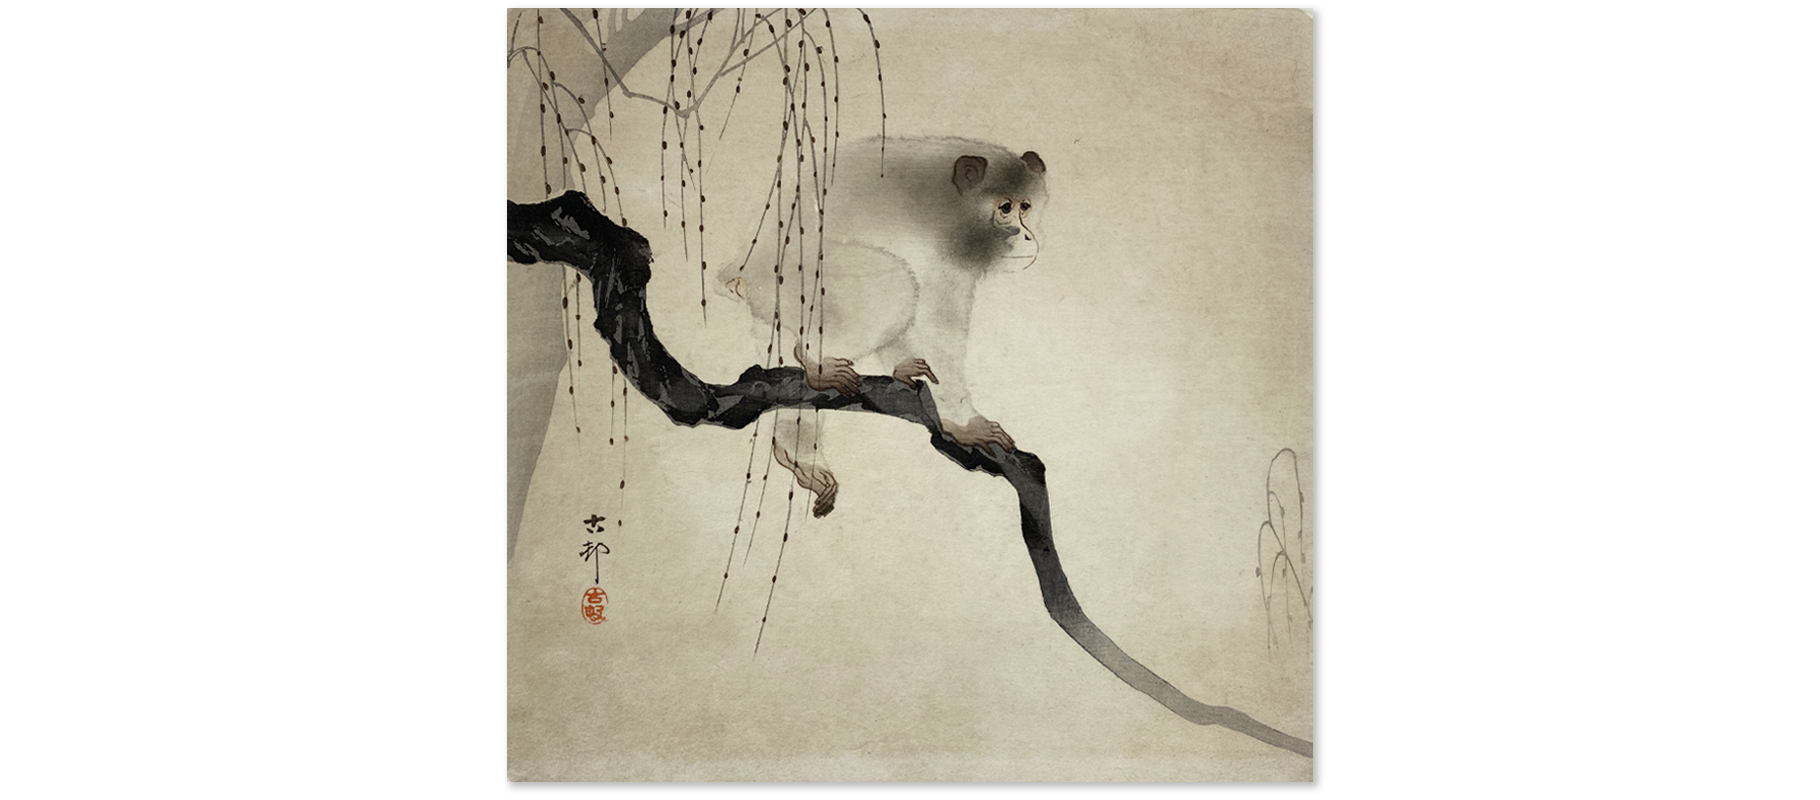 Shin-hanga: Japanese print history, restoration and framing